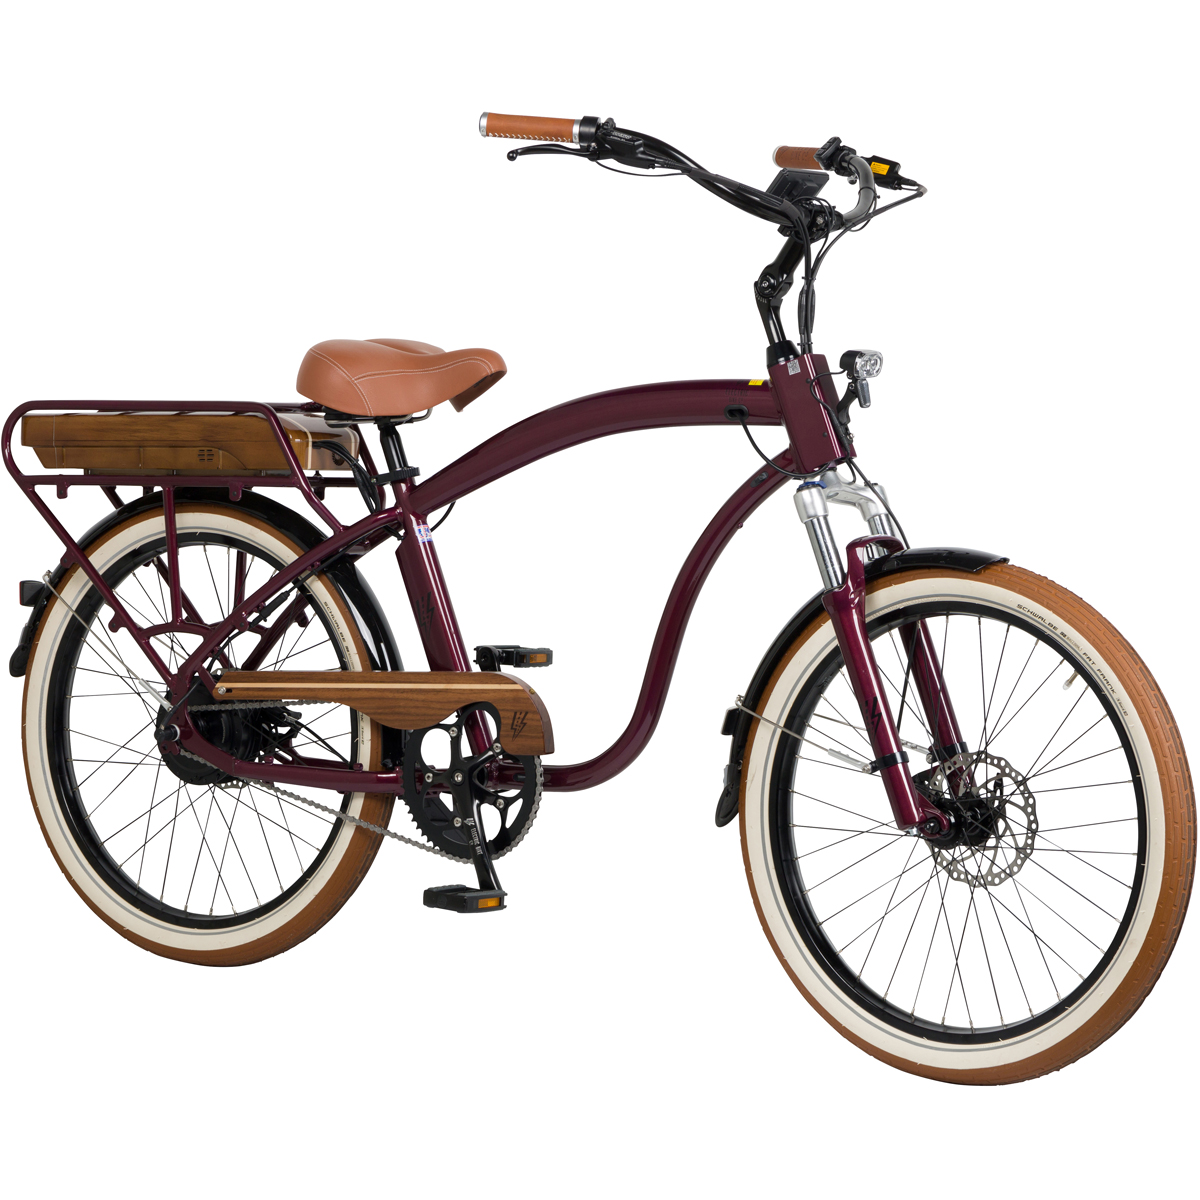 Electric-Bike-Company-Model-C-kong red-airbrush-angle